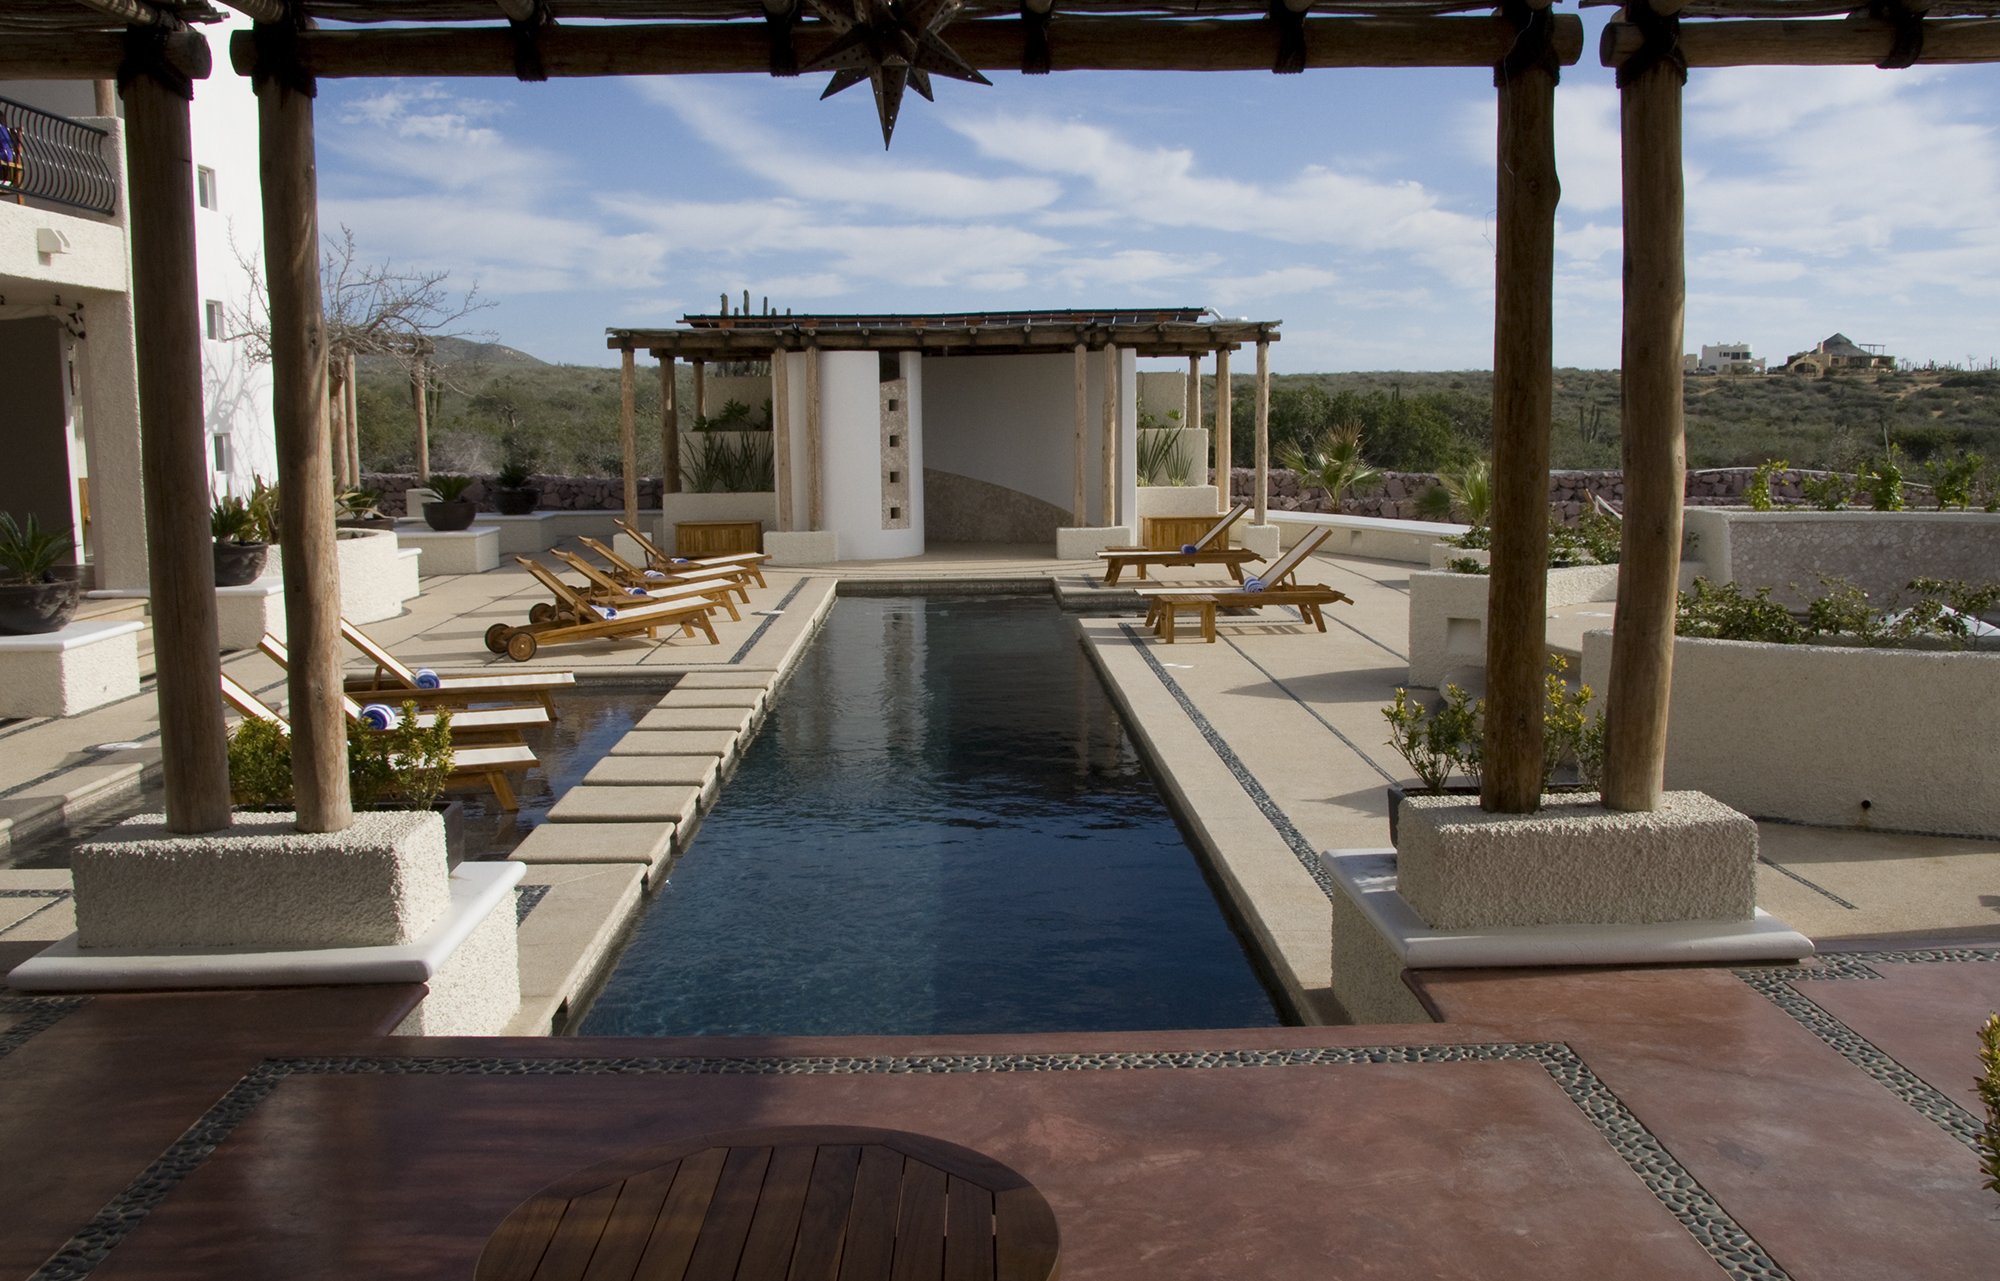 Swimming Pool at the Resort in Baja Mexico (Copy) (Copy) (Copy) (Copy)